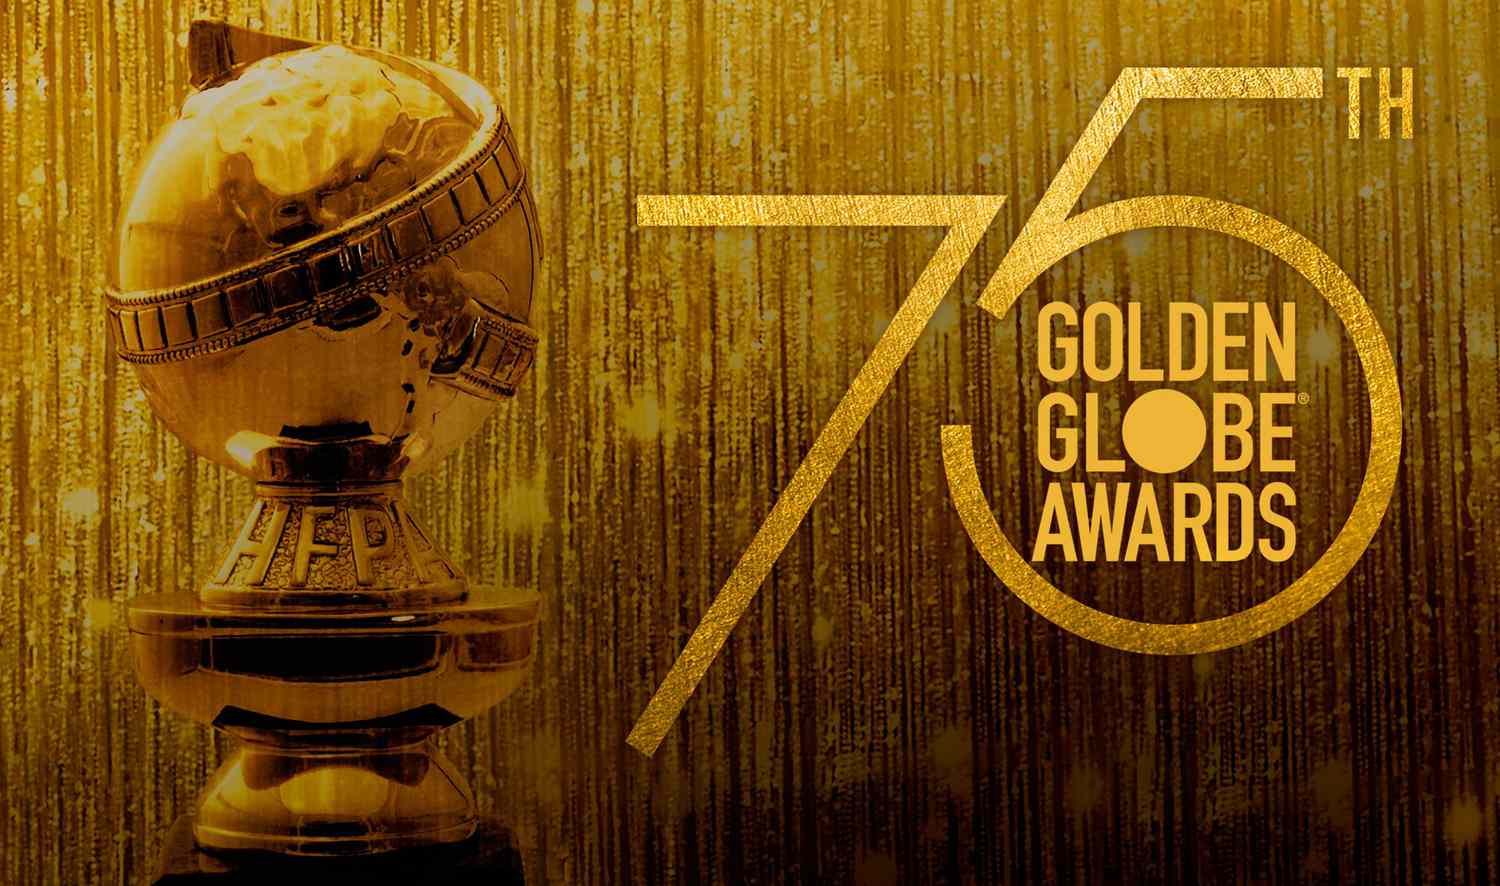 The 75th Golden Globe Awards - Season 75